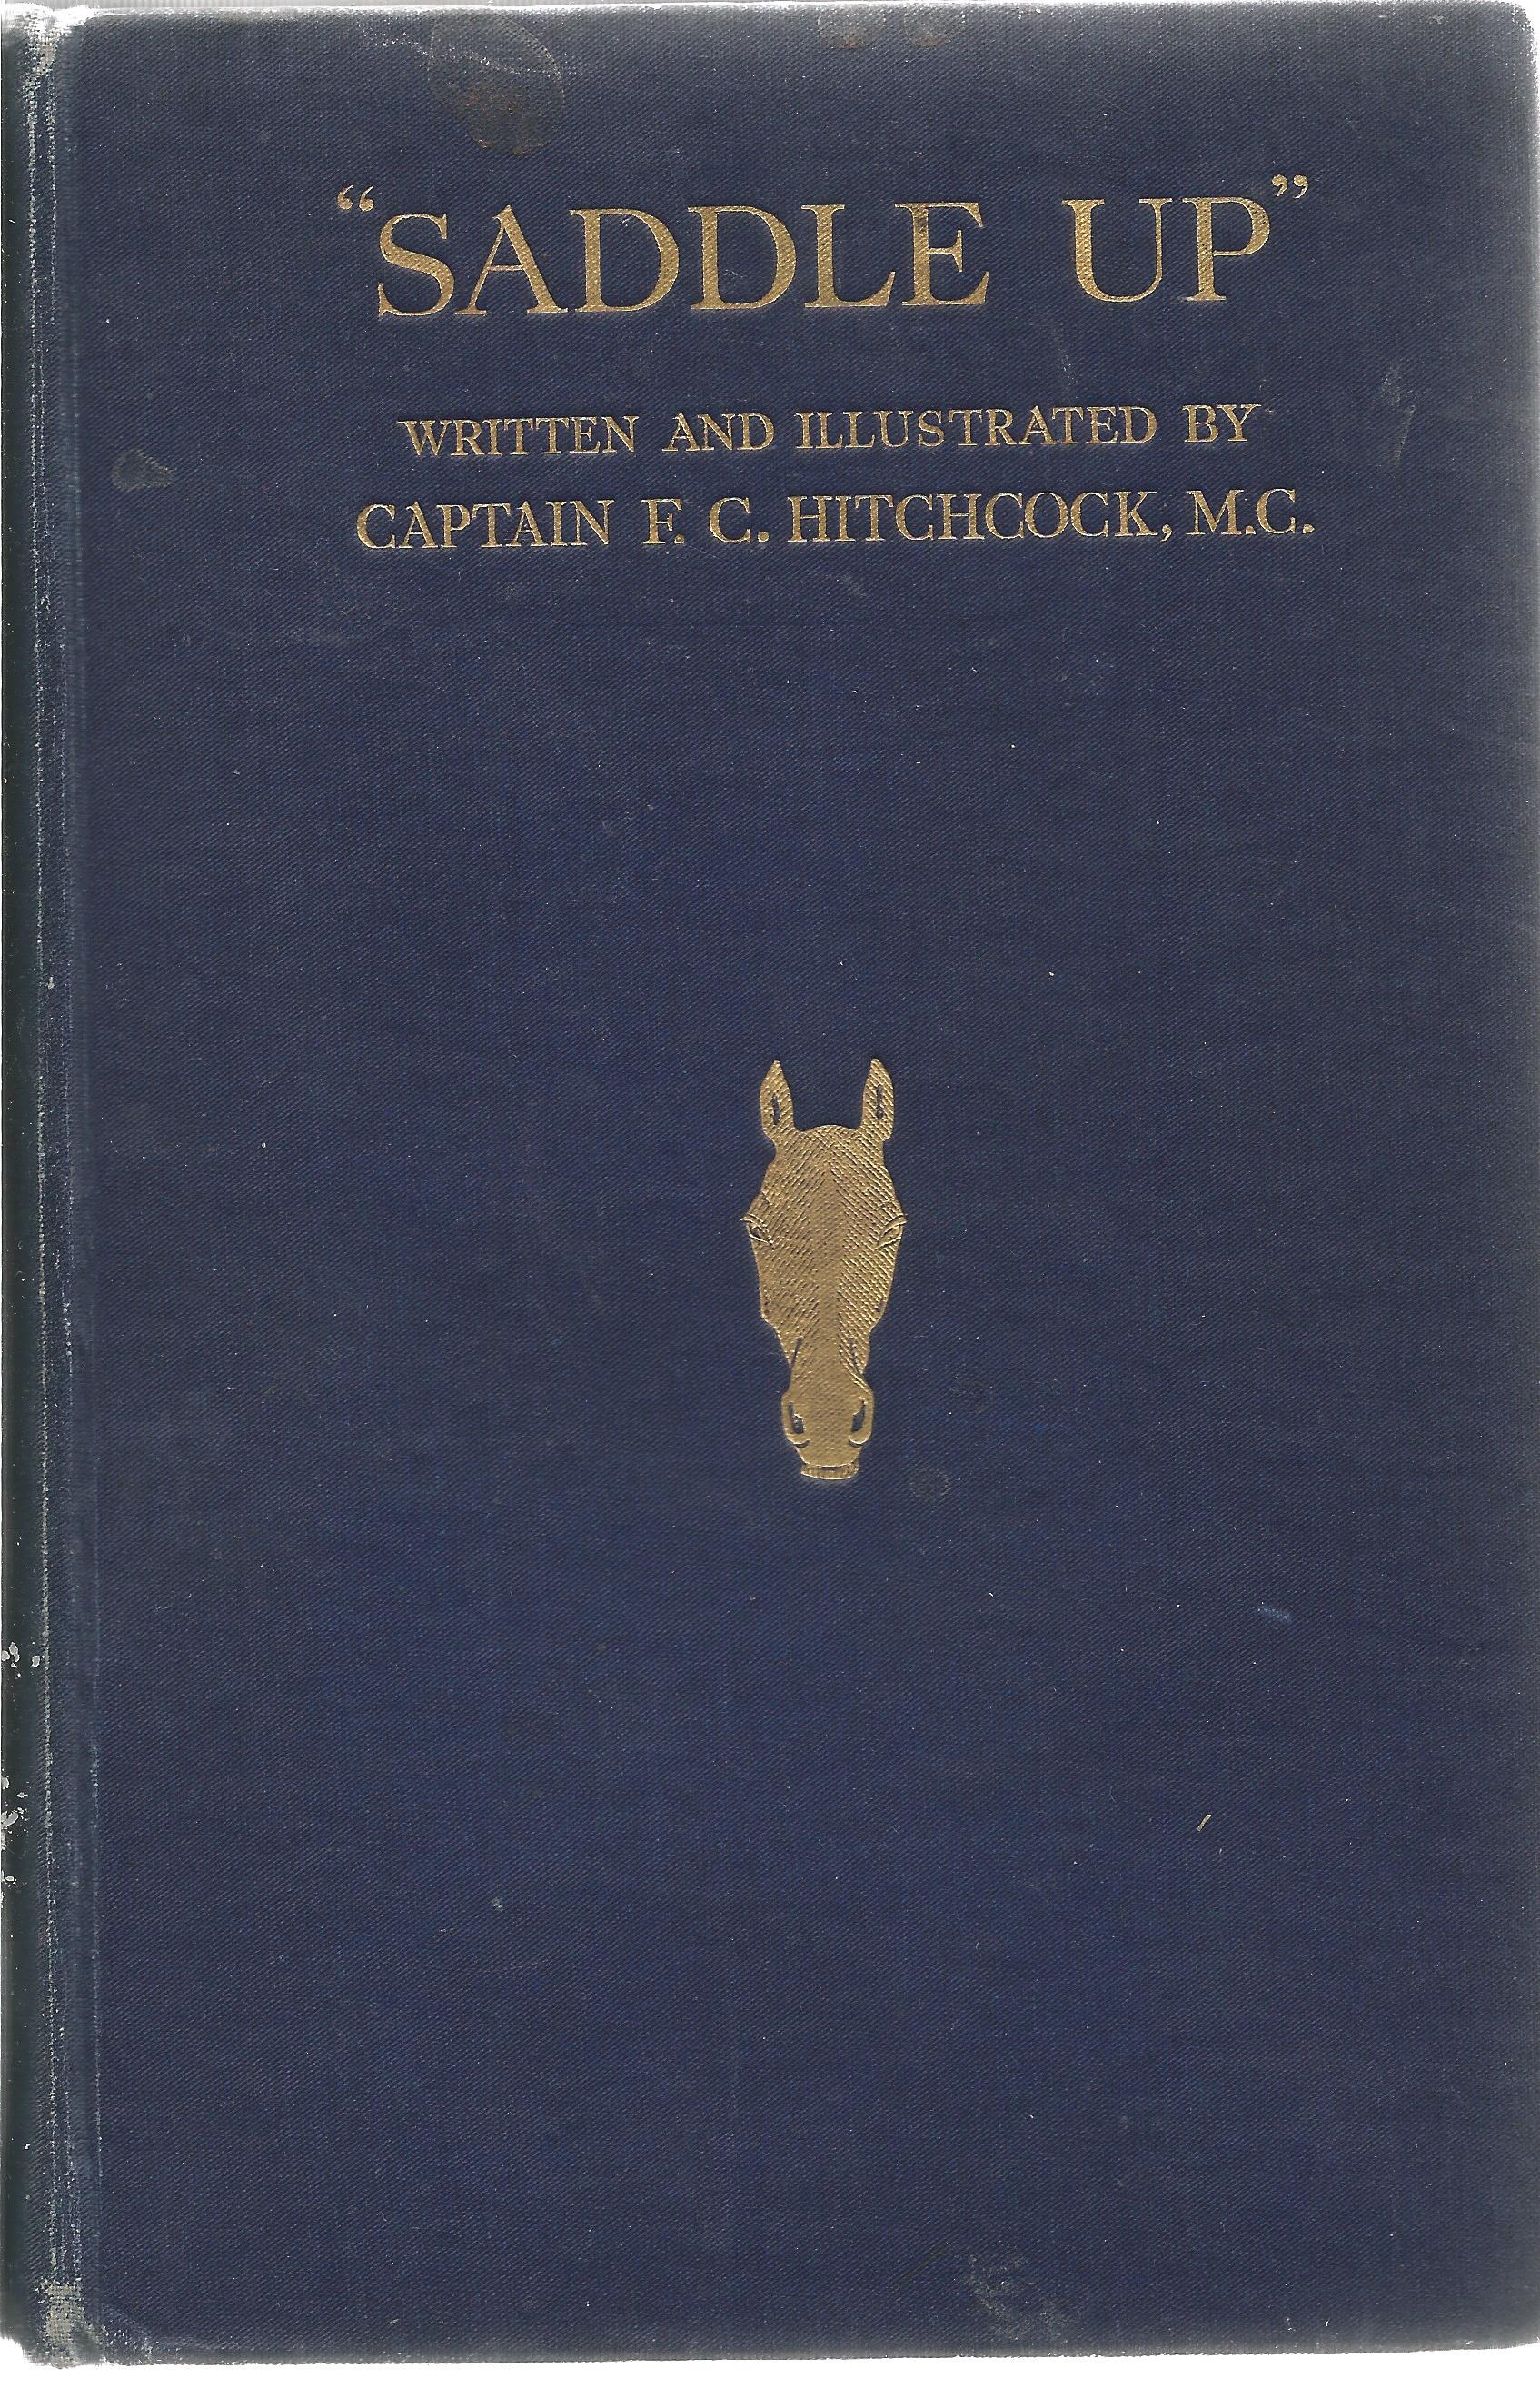 Captain F C Hitchcock hardback book Saddle Up 1933 published by Hurst & Blackett Ltd in good